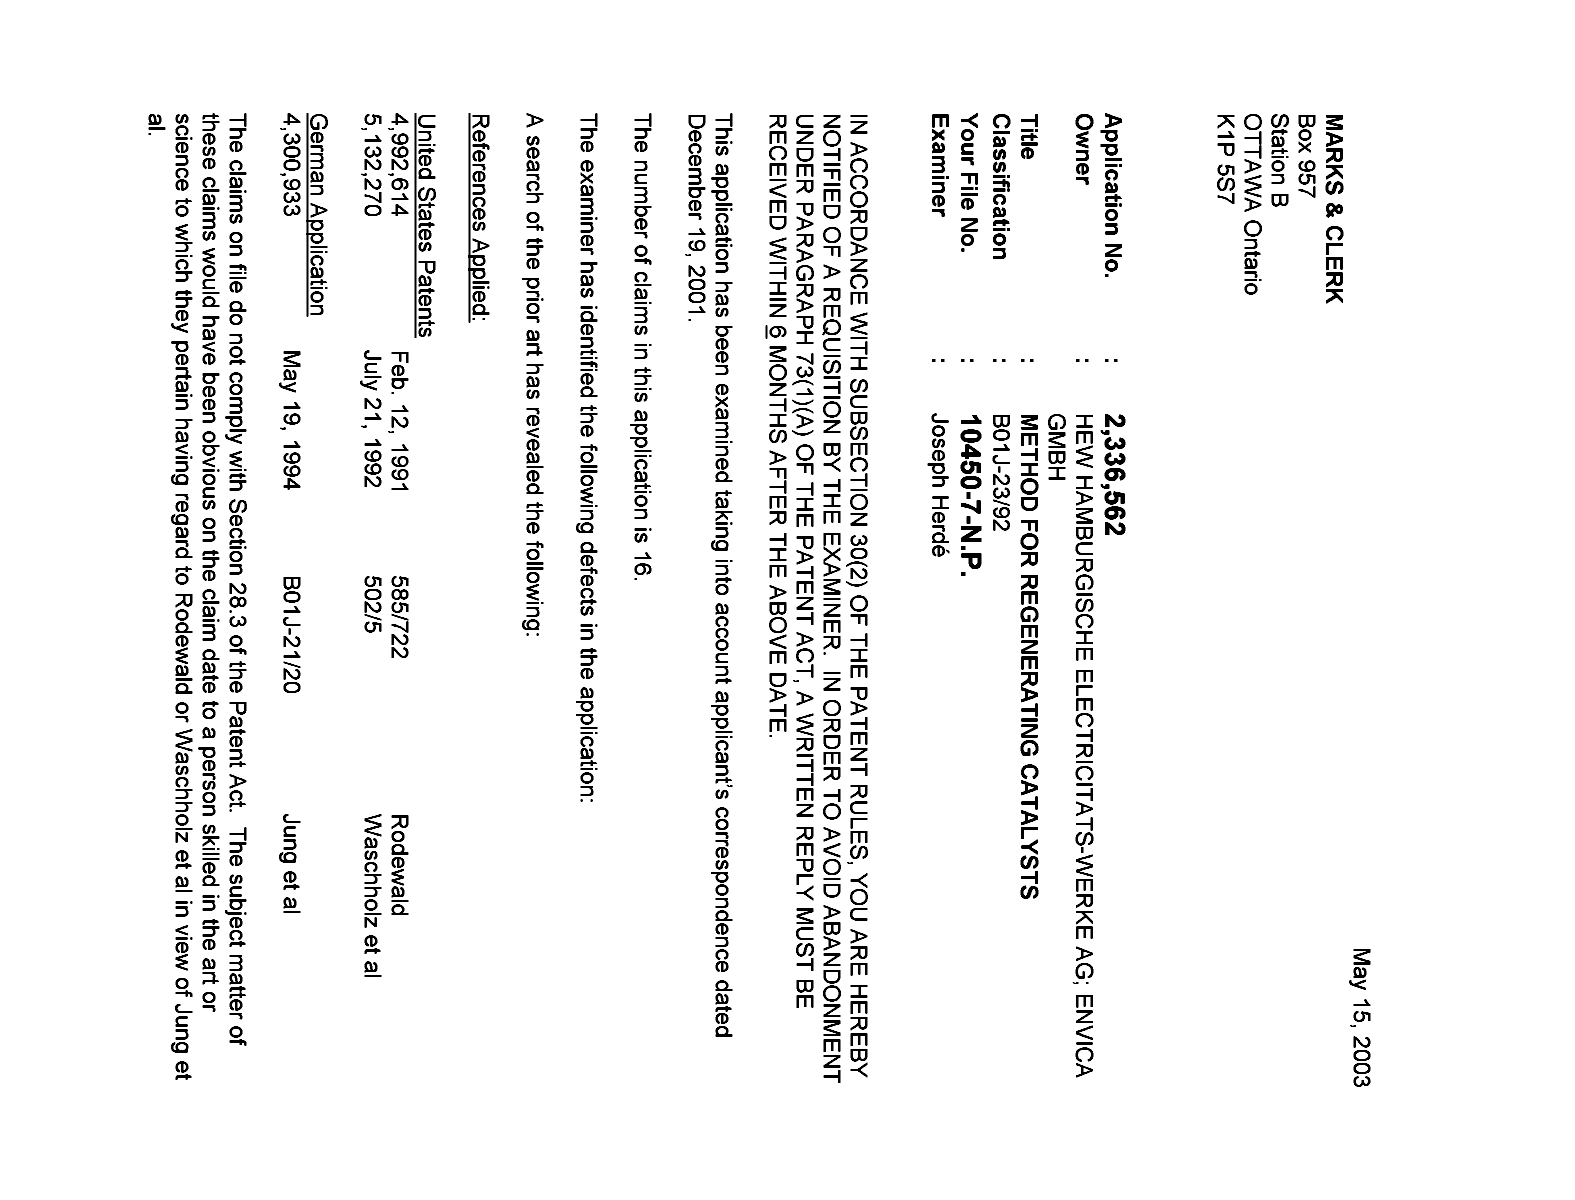 Canadian Patent Document 2336562. Prosecution-Amendment 20030515. Image 1 of 2